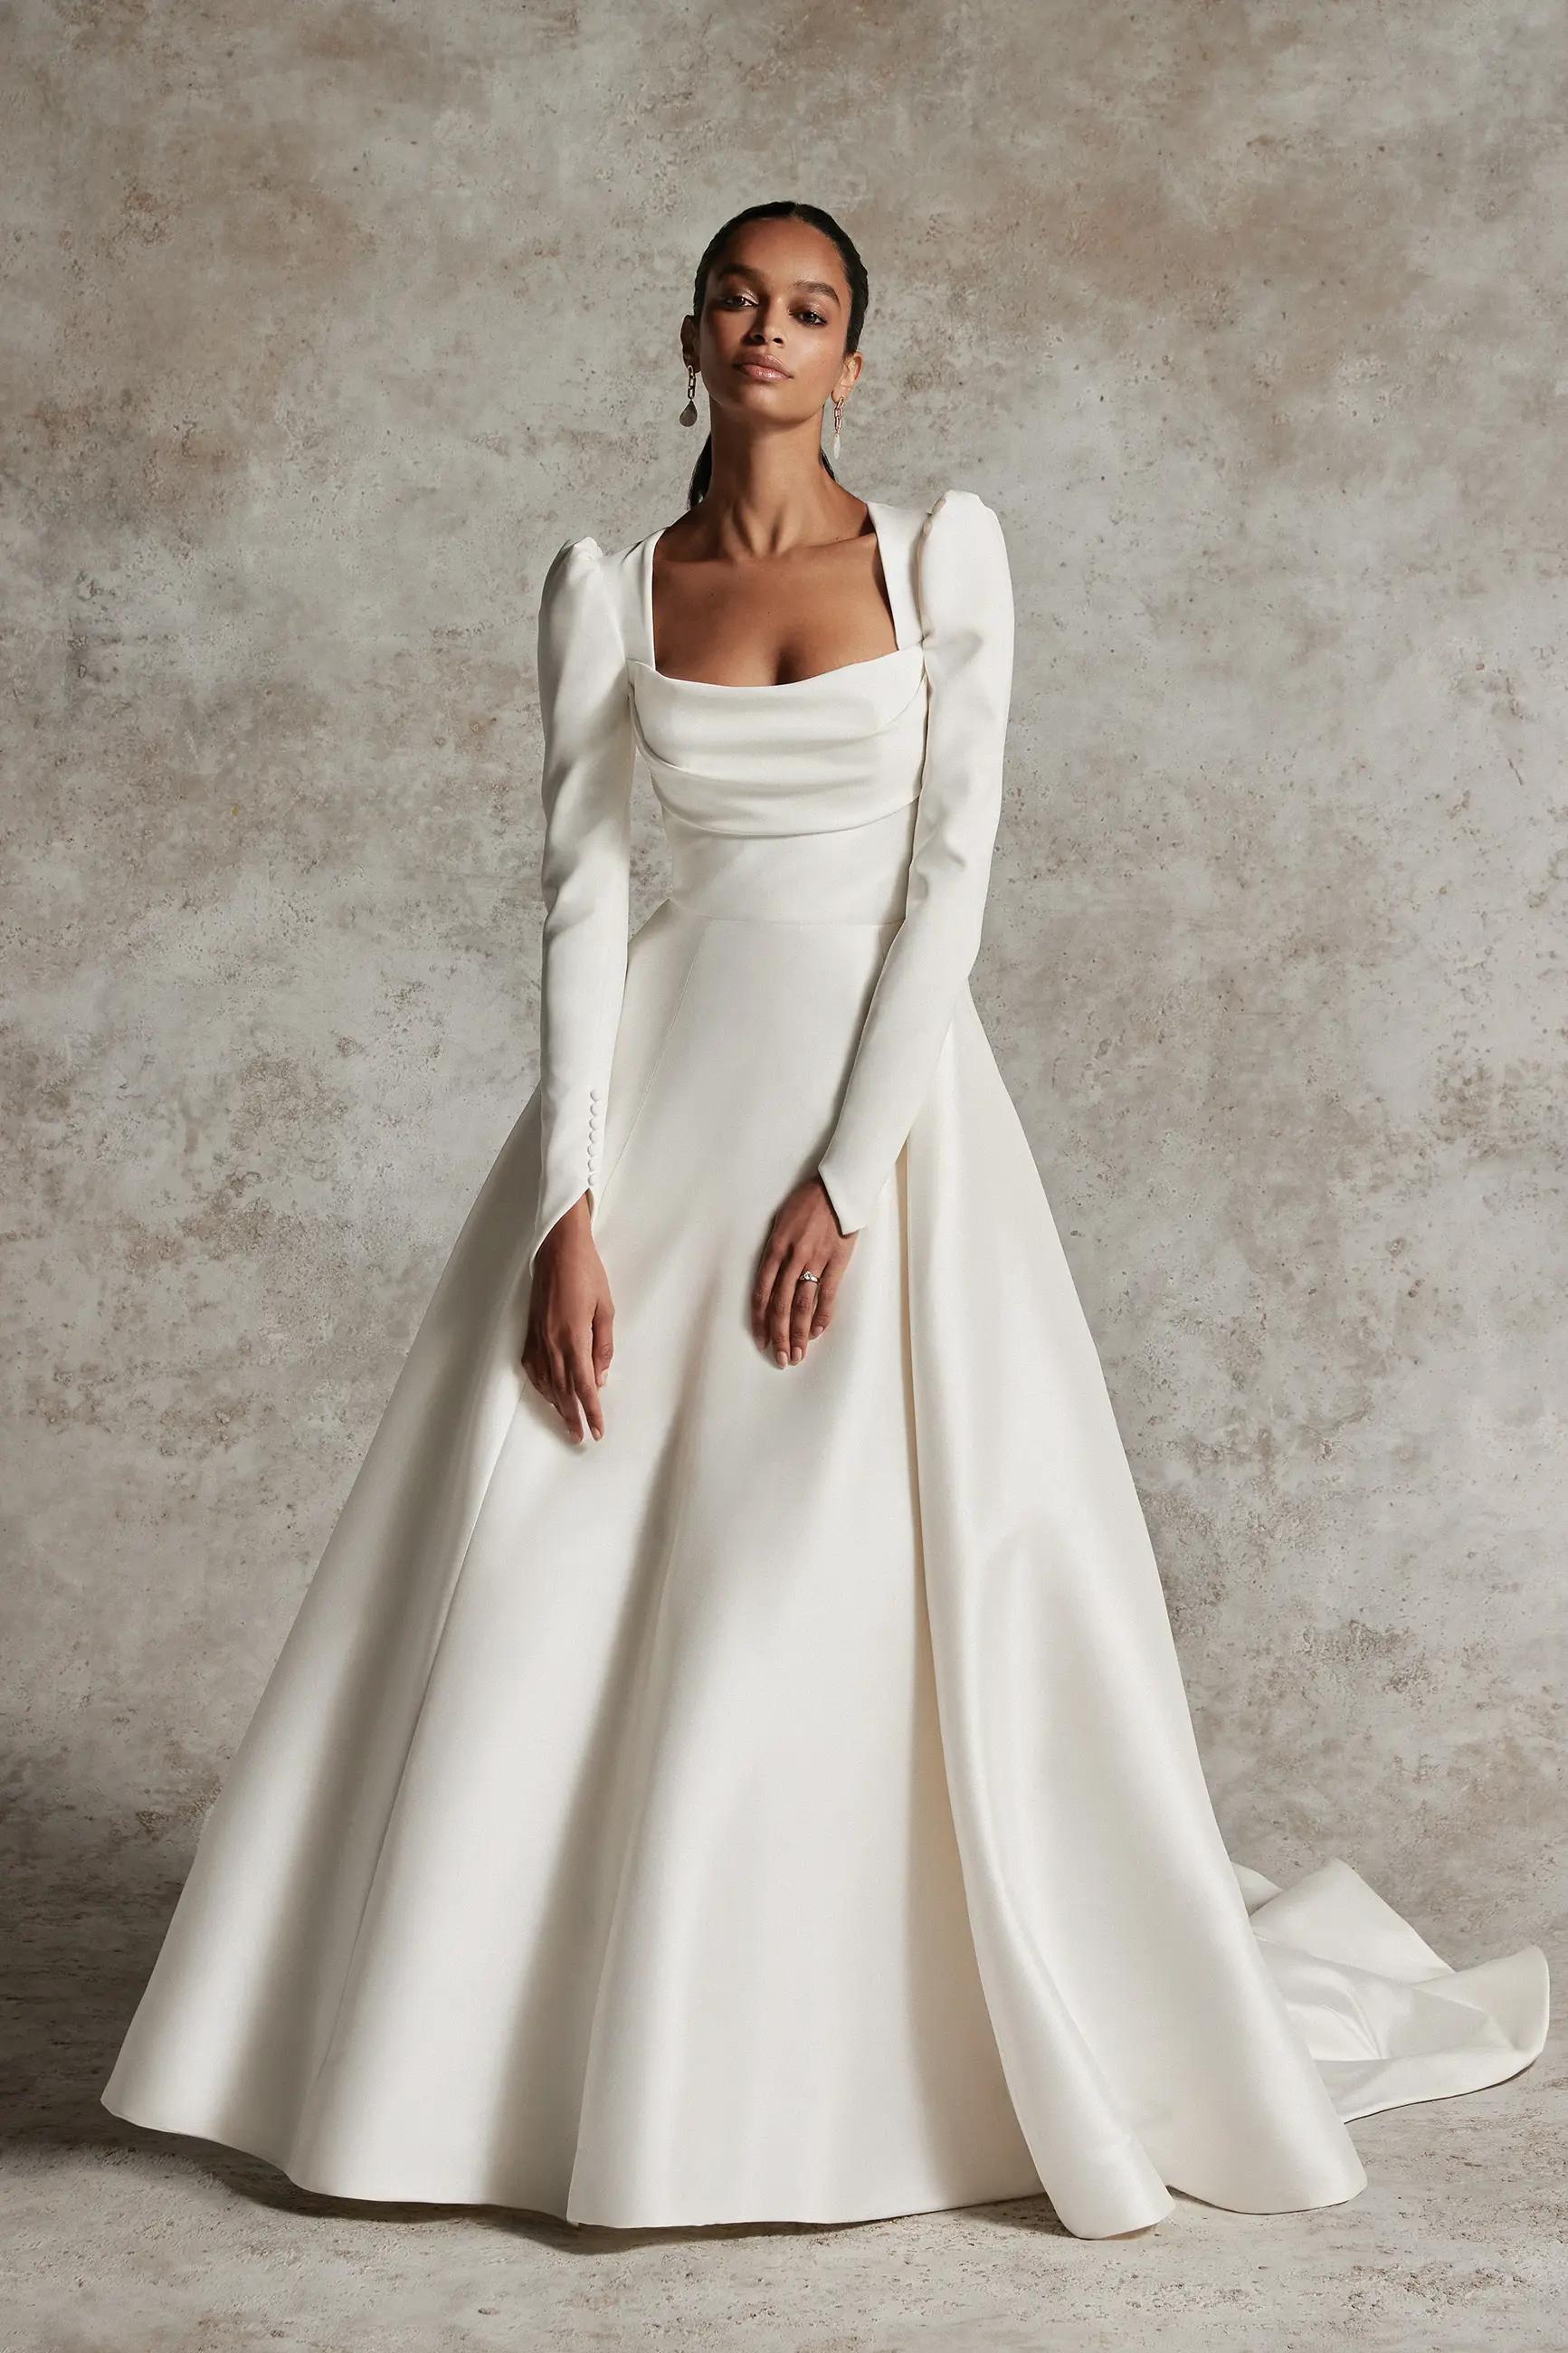 Sleeves of Elegance: Embracing Long Sleeves in December Bridal Fashion Image